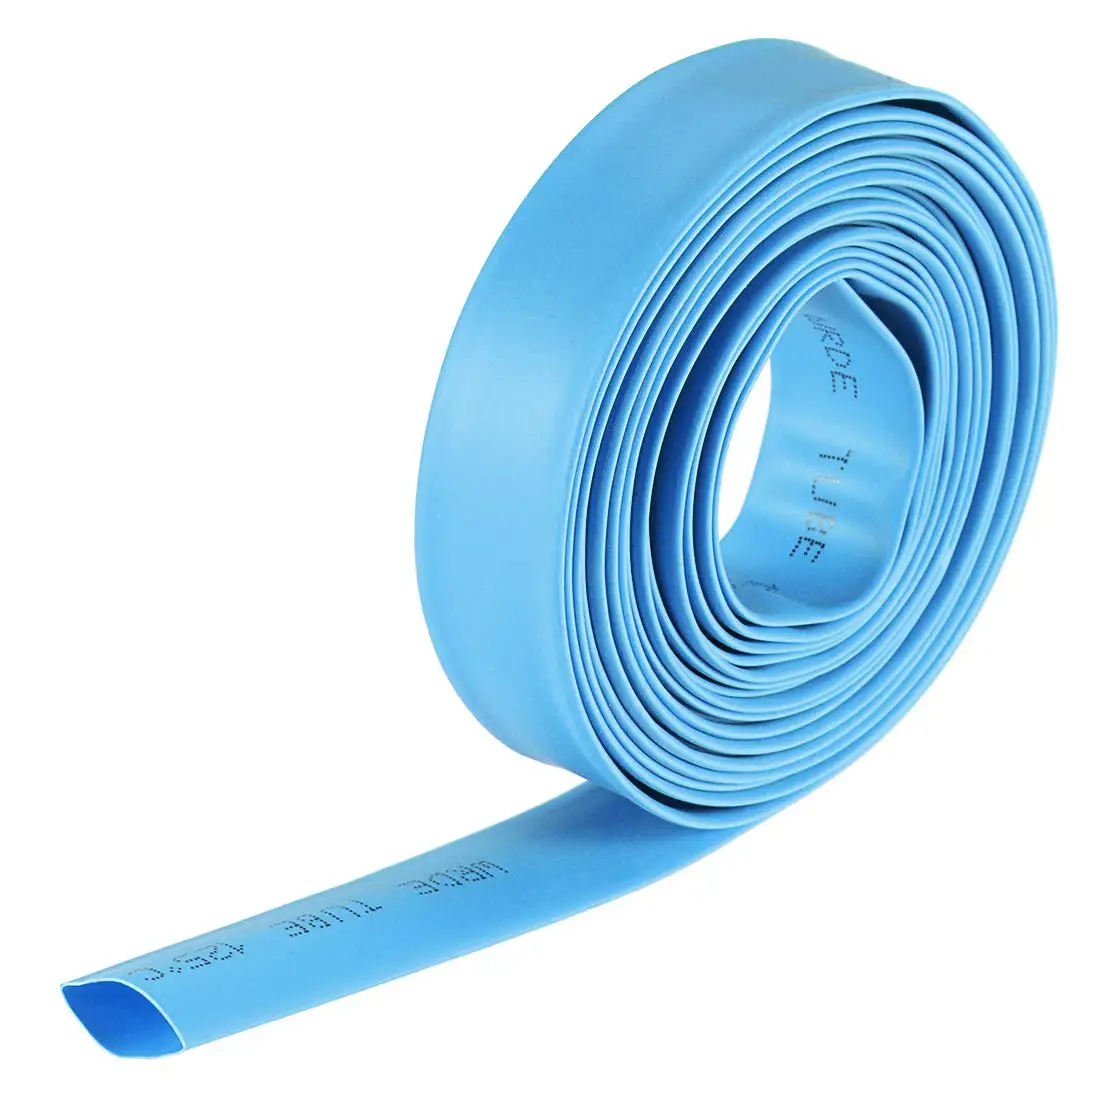 

Keszoox Heat Shrink Tubing, 3/8"(10mm) Dia 17mm Flat Width 2:1 Ratio Shrinkable Tube Cable Sleeve 10ft - Blue